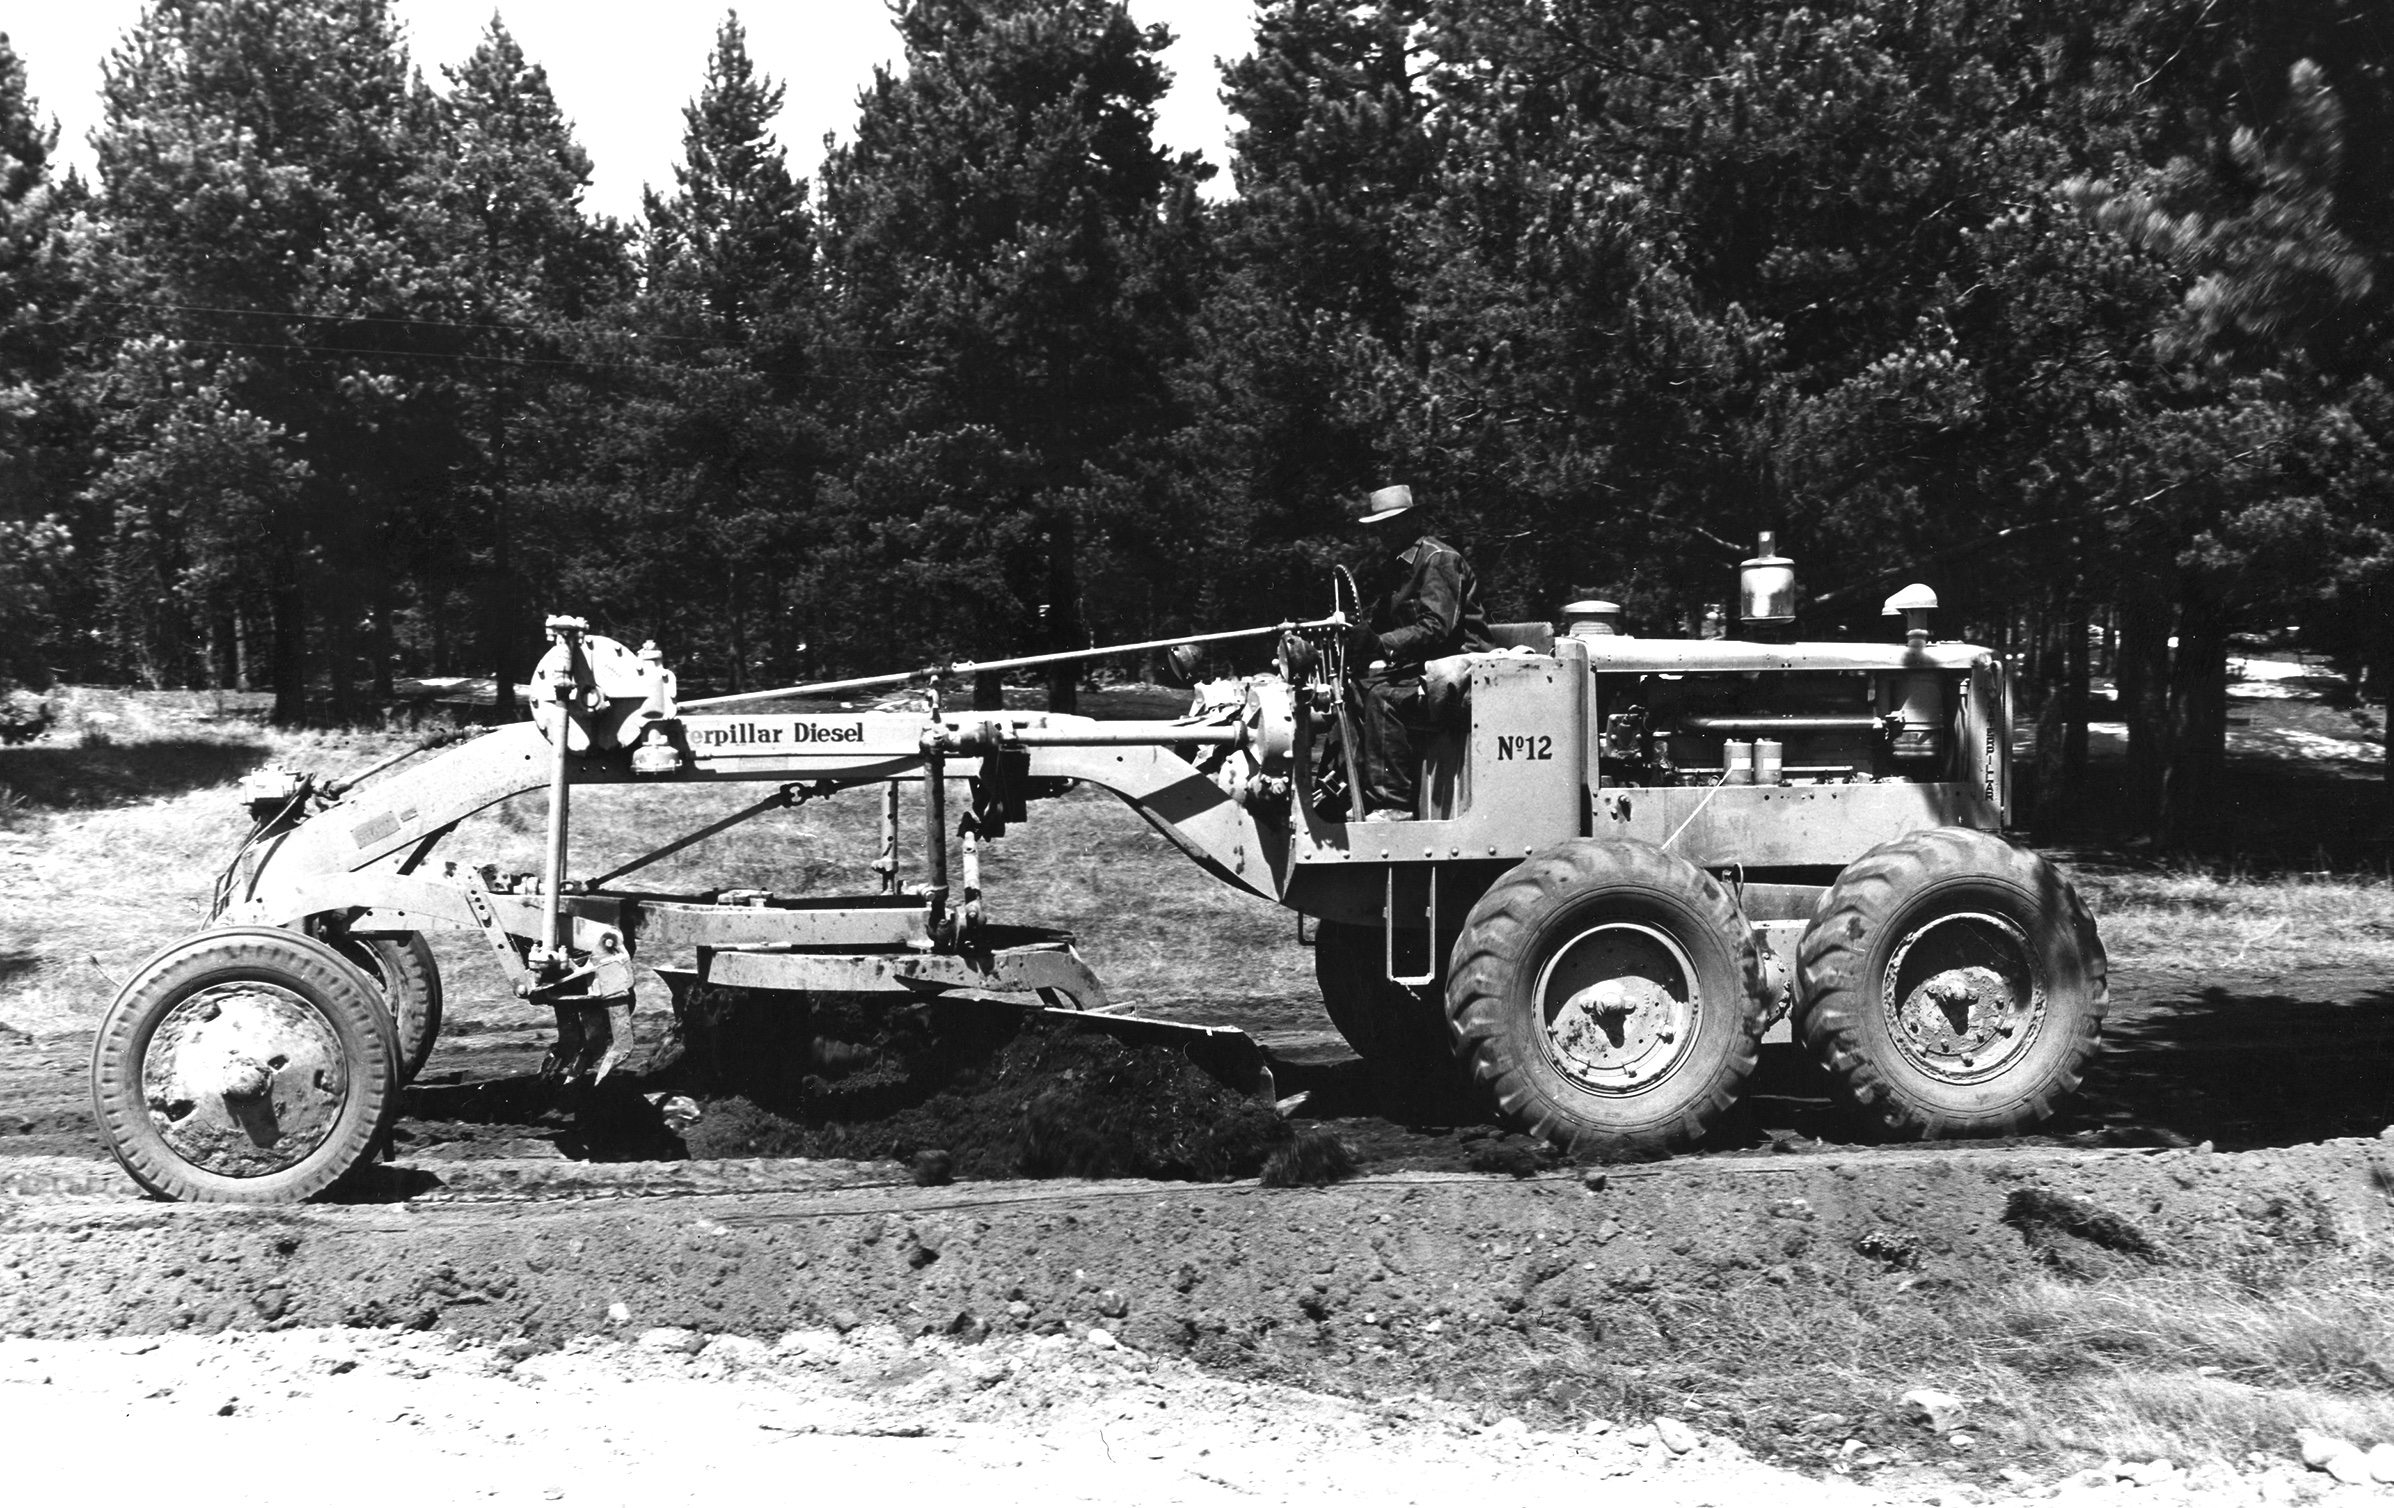 A road grinder working at Camp Hale.